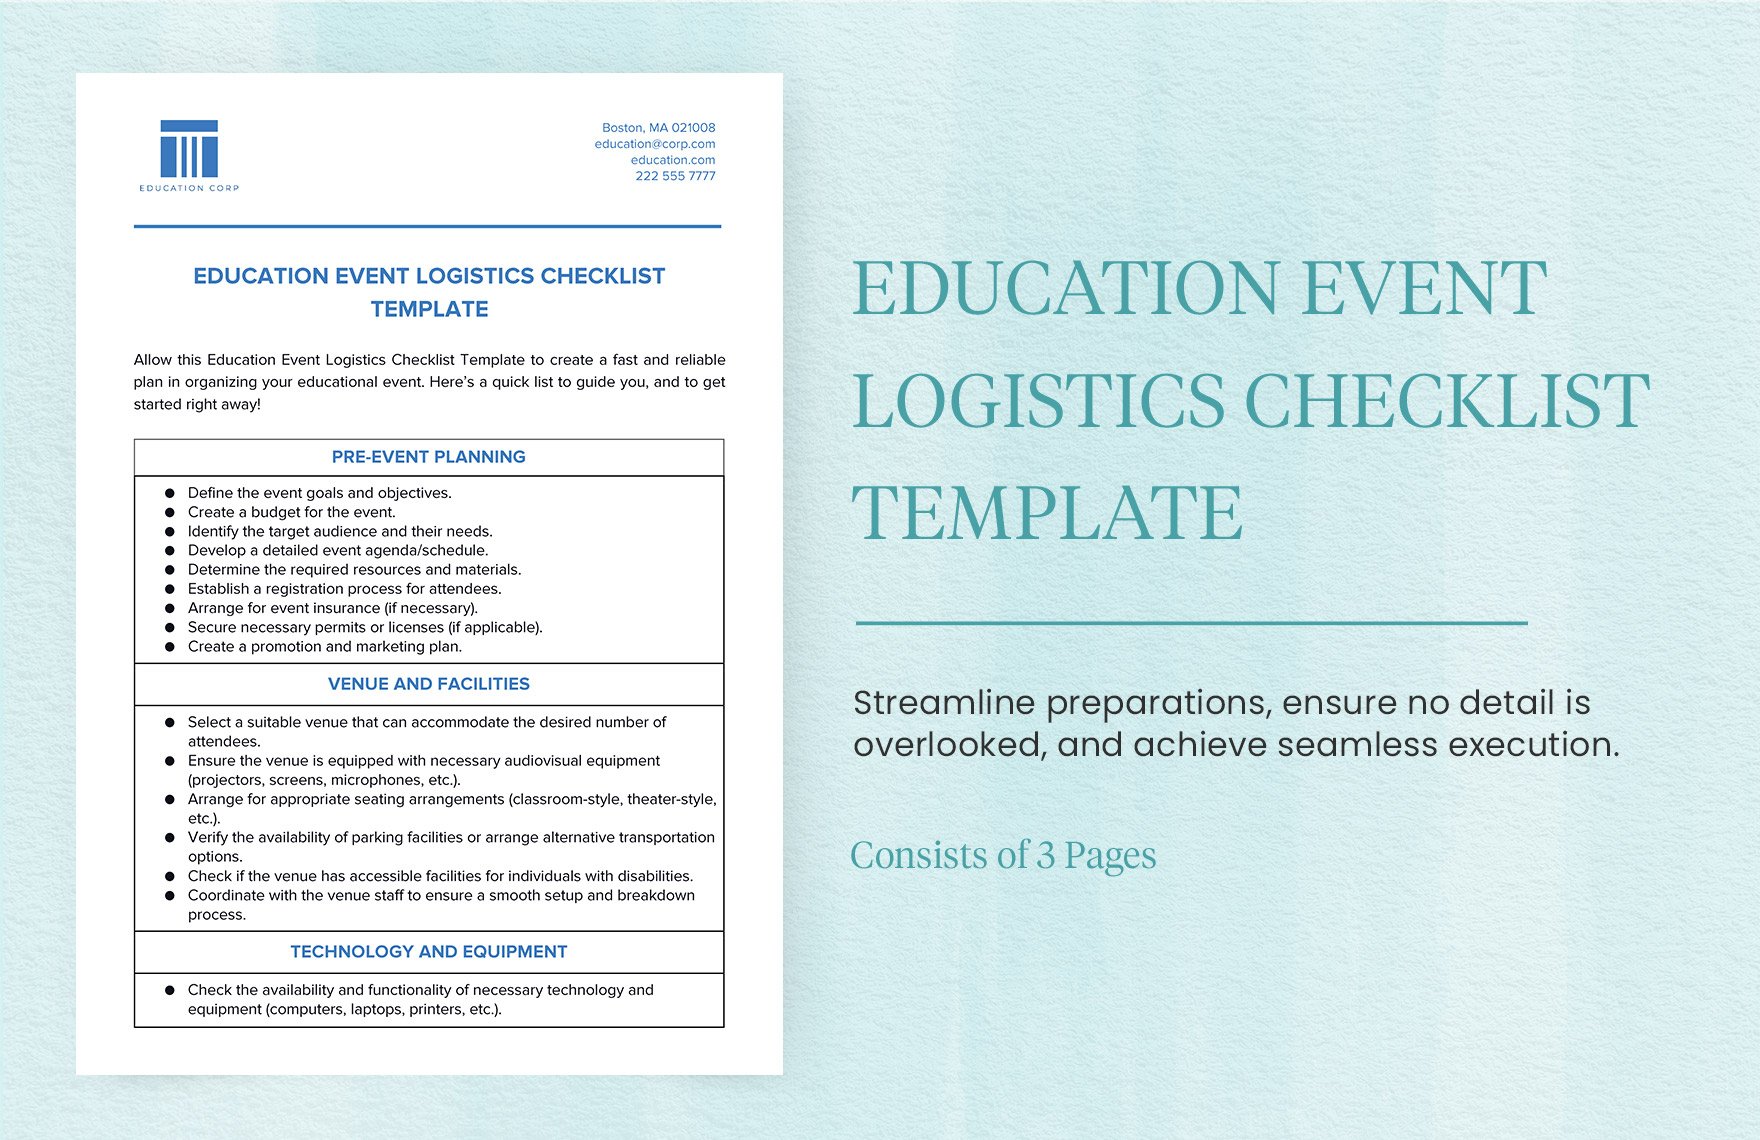 Education Event Logistics Checklist Template in Word, Google Docs, PDF